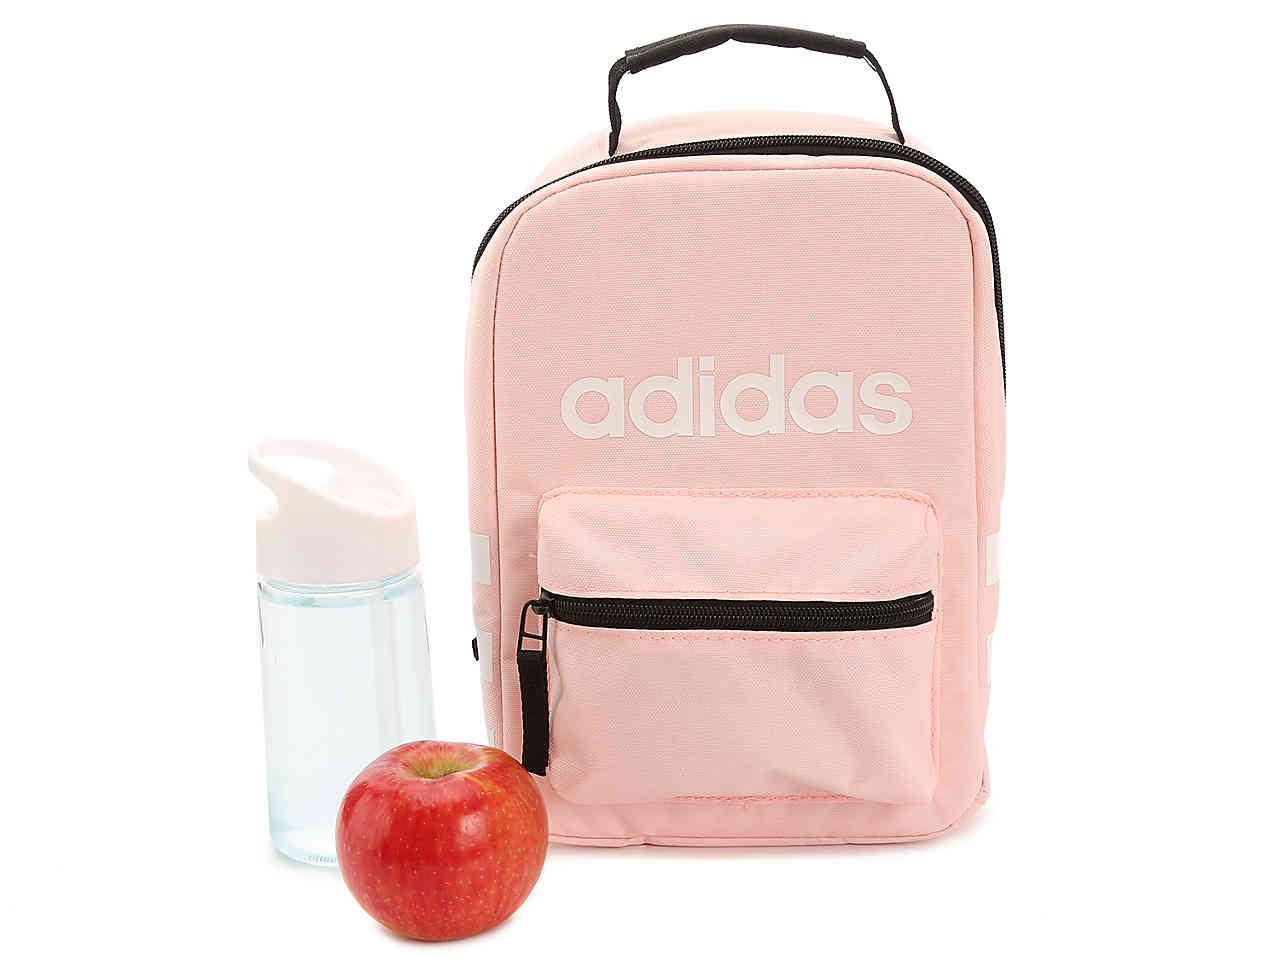 adidas Santiago Lunch Bag | Bags, Lunch bag, Cute backpacks for school